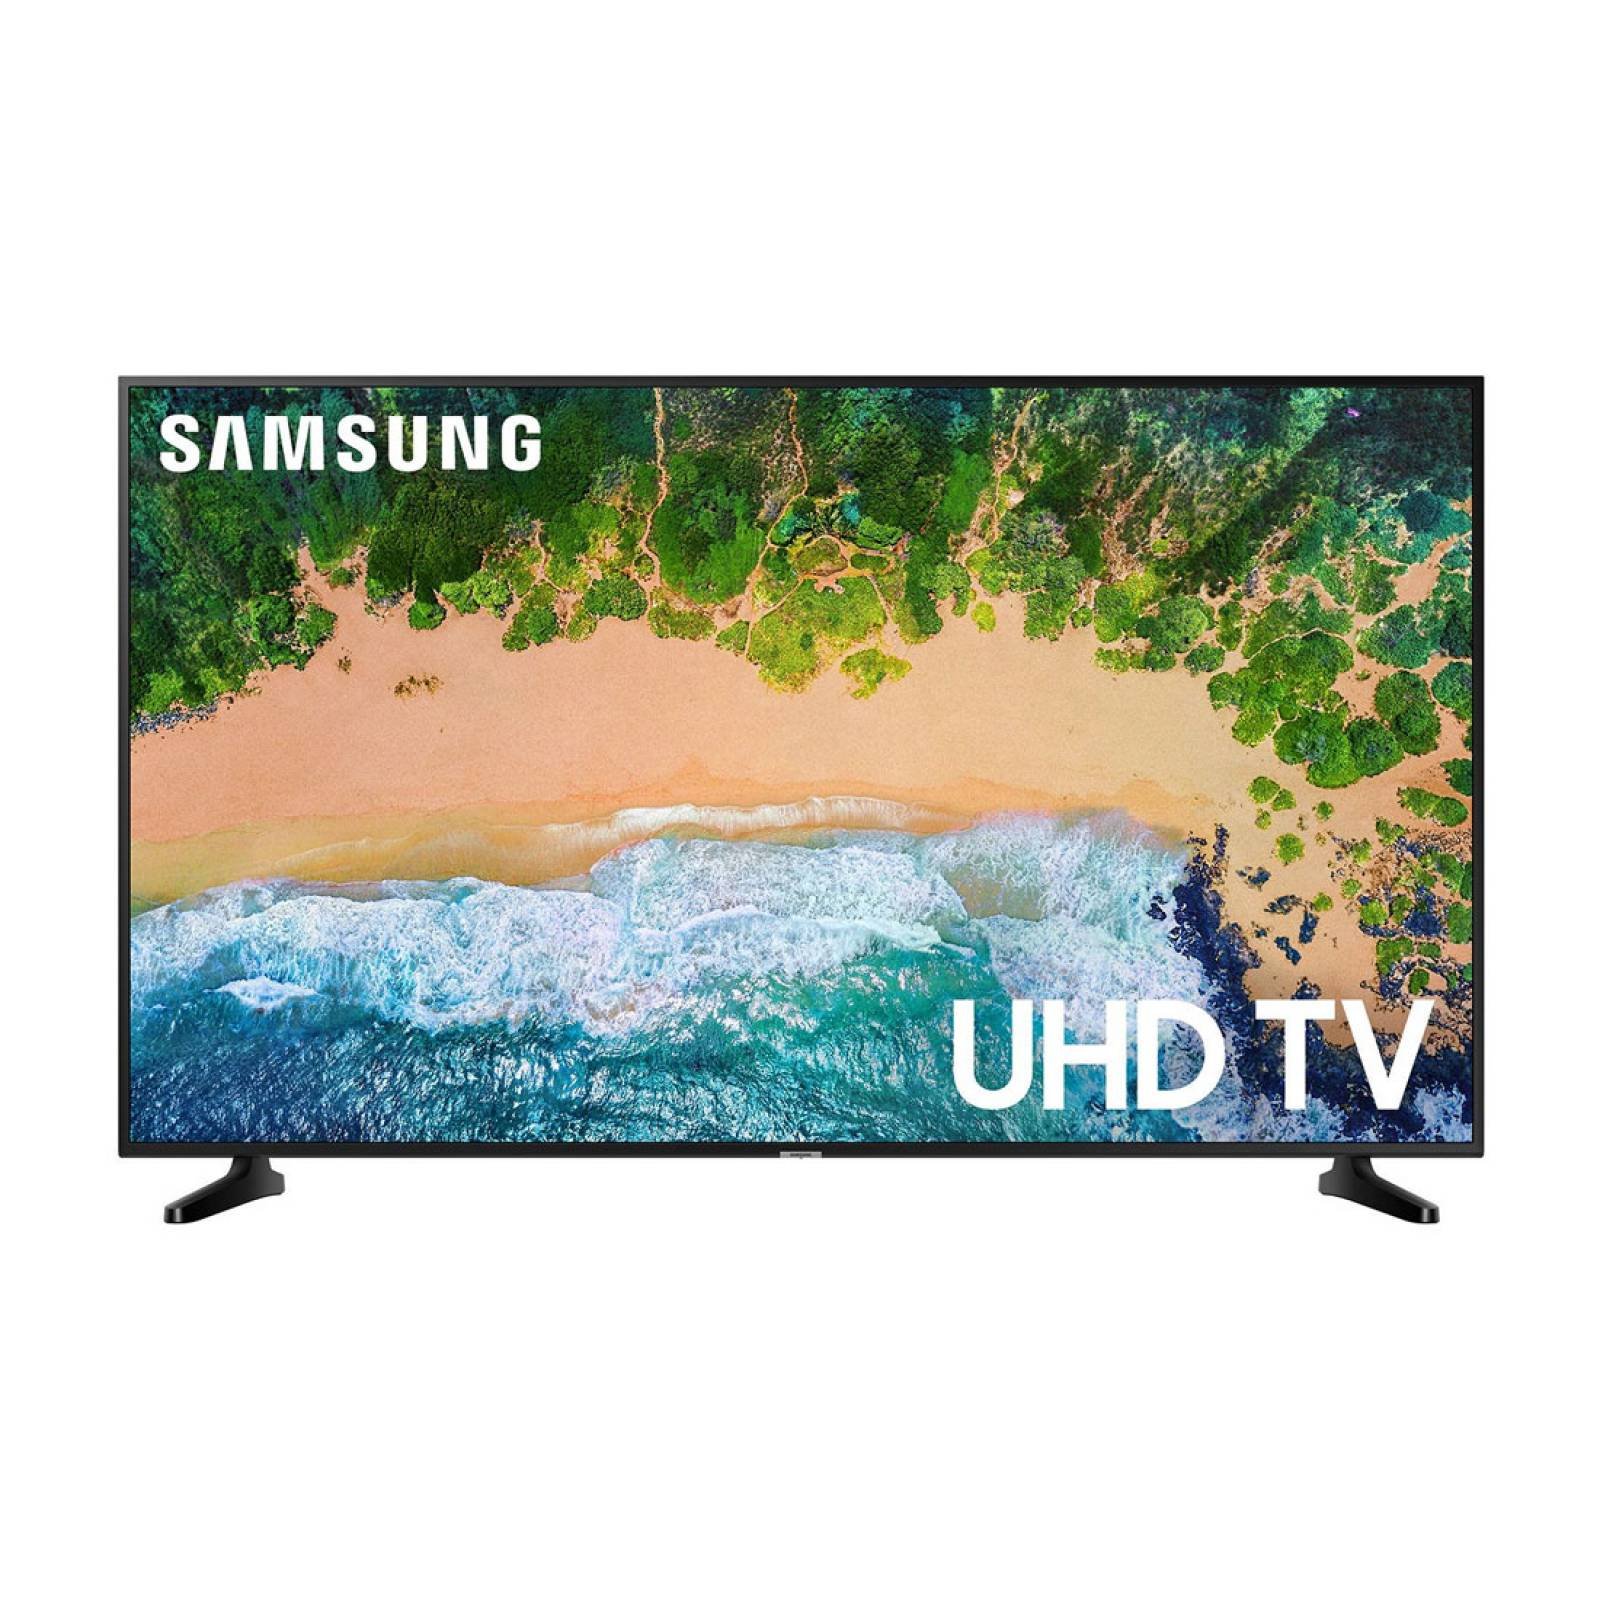 Pantalla Smart TV HD 55 Pulgadas Led UN55NU6950FXZA Samsung